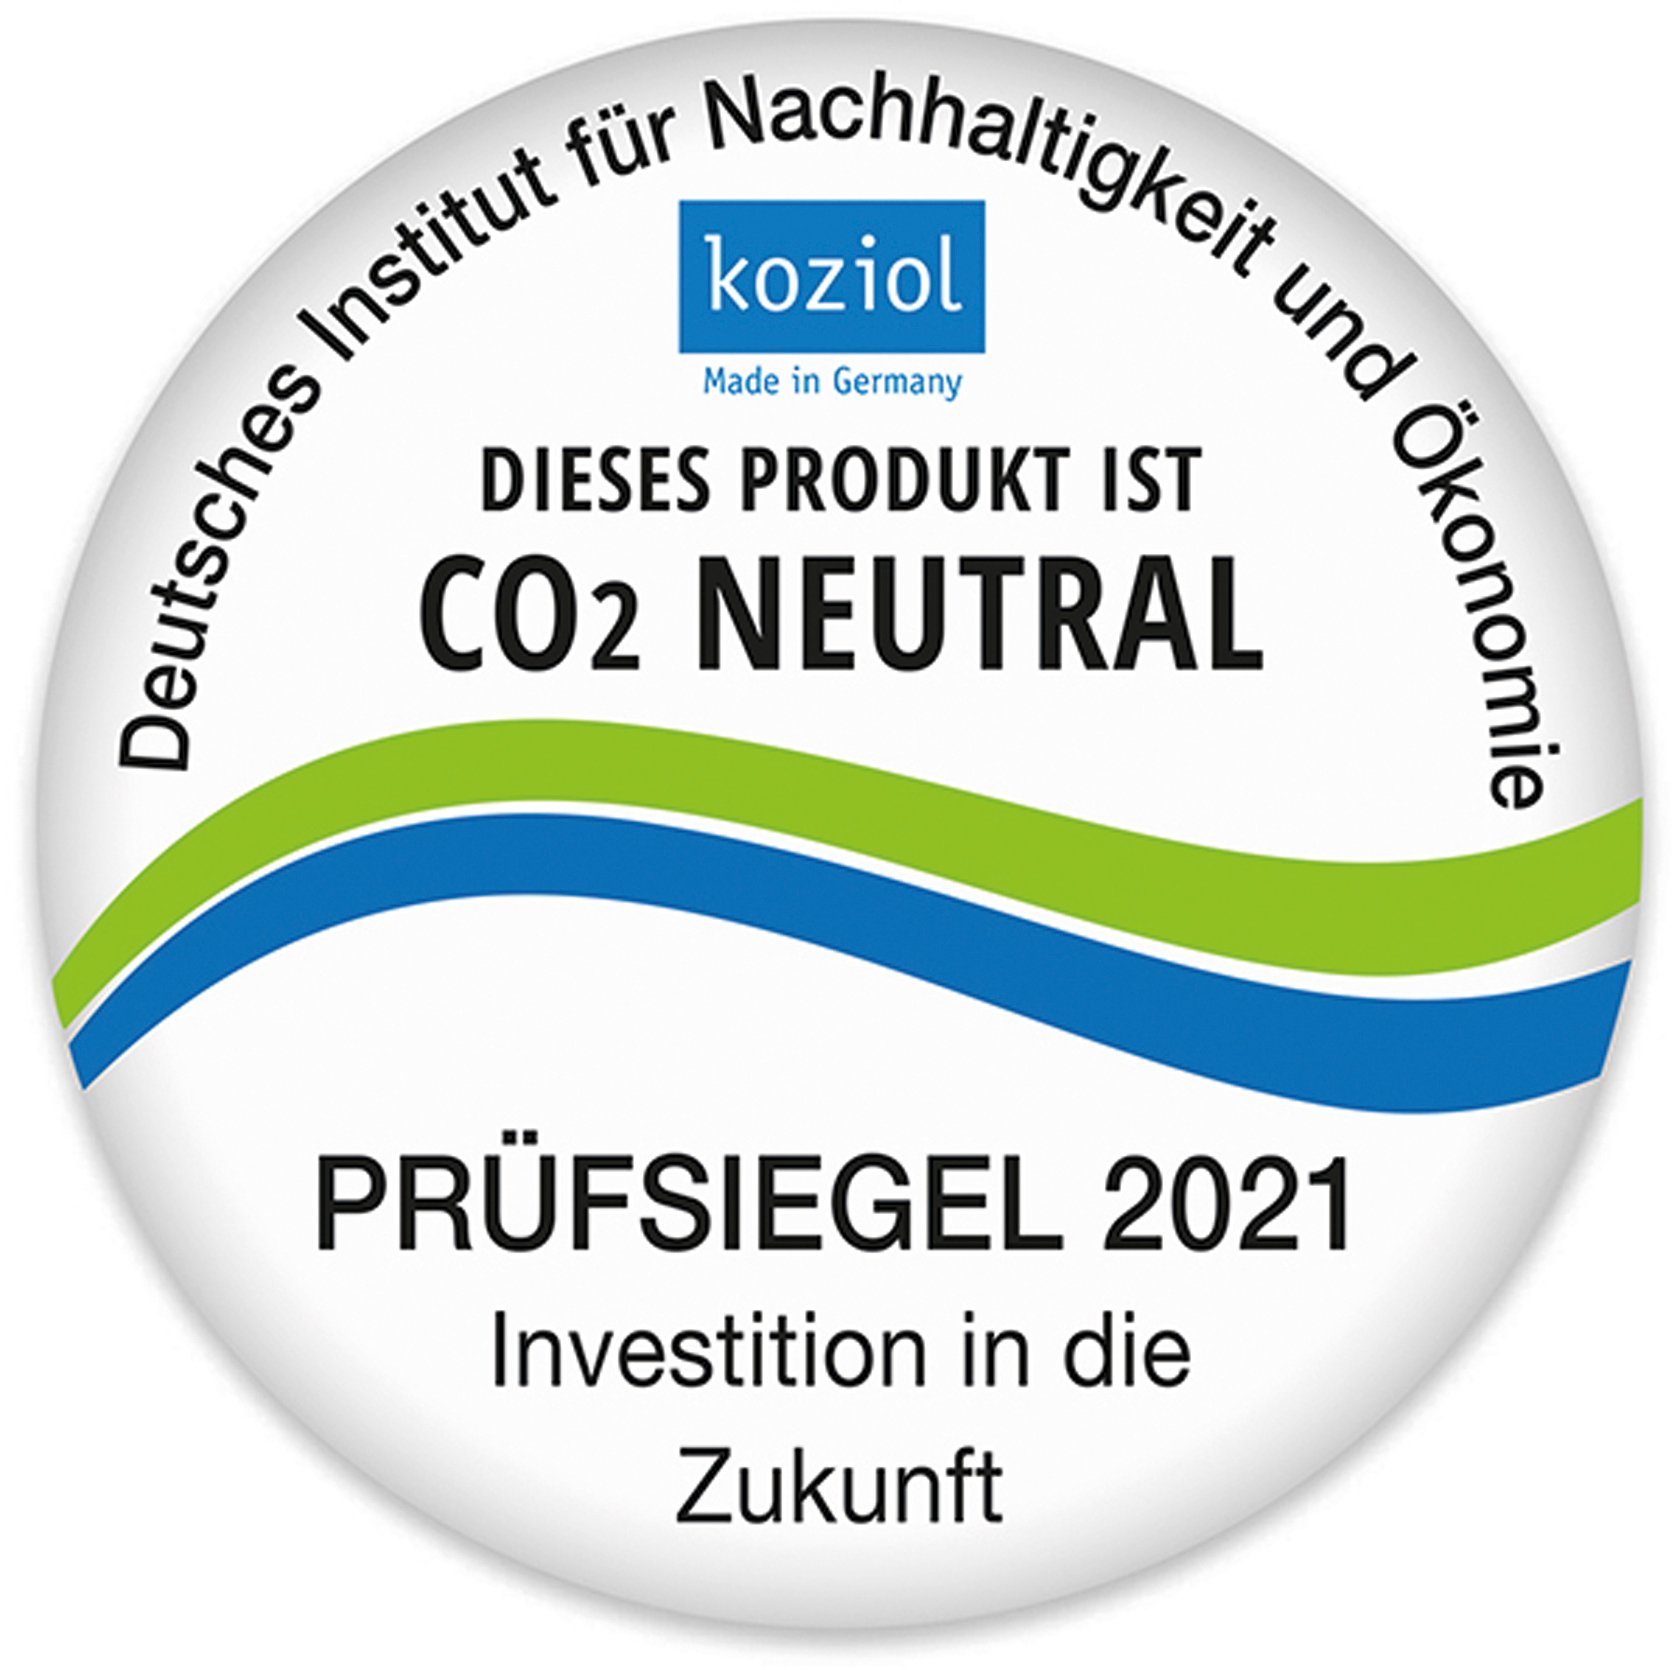 CO² BIBO, grey Germany, organic KOZIOL neutral Biomülleimer Melaminfrei, produziert 100% recycelbar. in made